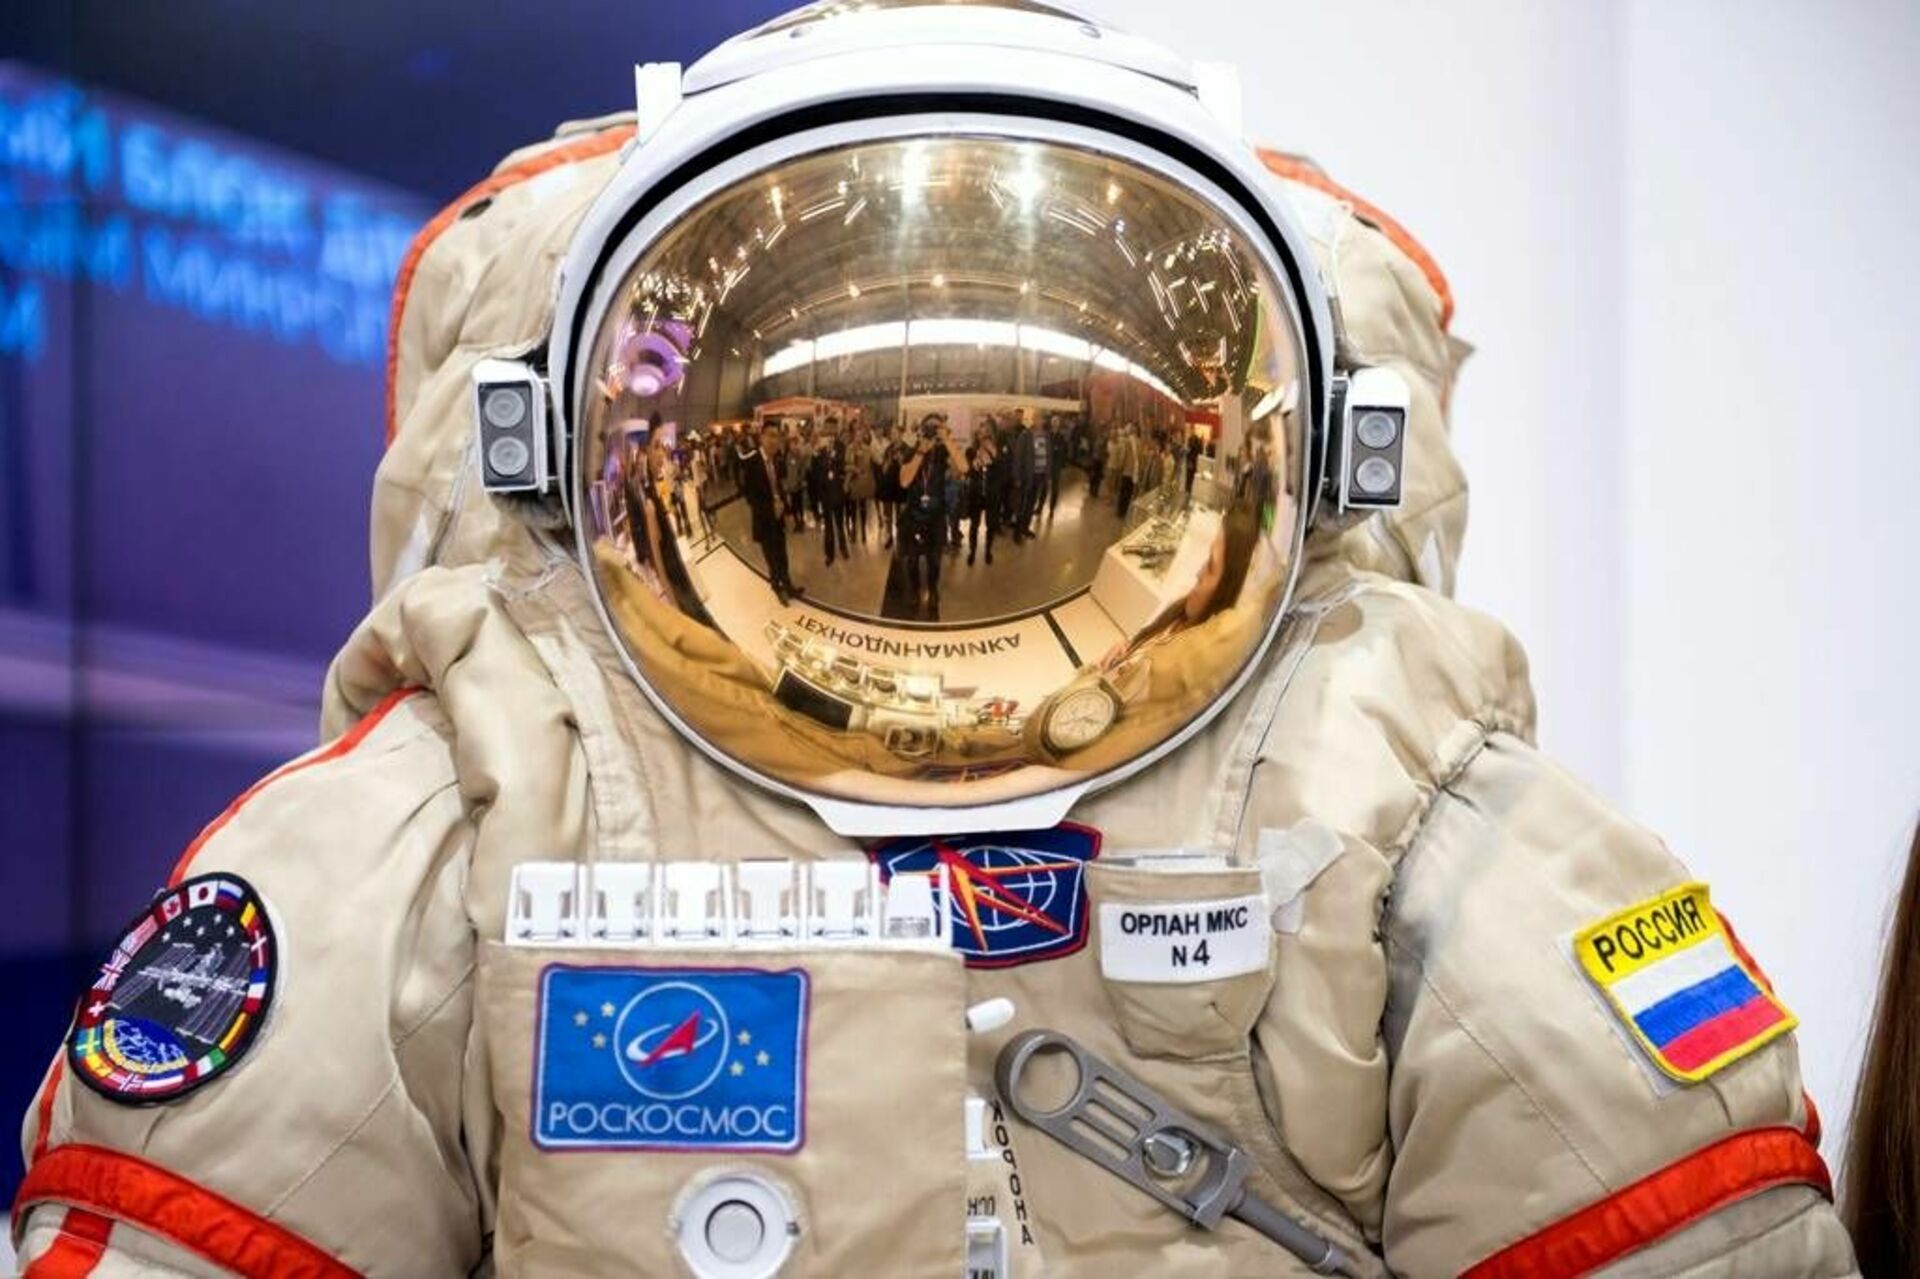 Со скафандром. Скафандр Космонавта Орлан МКС. Шлем Орлан МКС. Орлан костюм Космонавта. Скафандр для выхода в открытый космос Орлан.